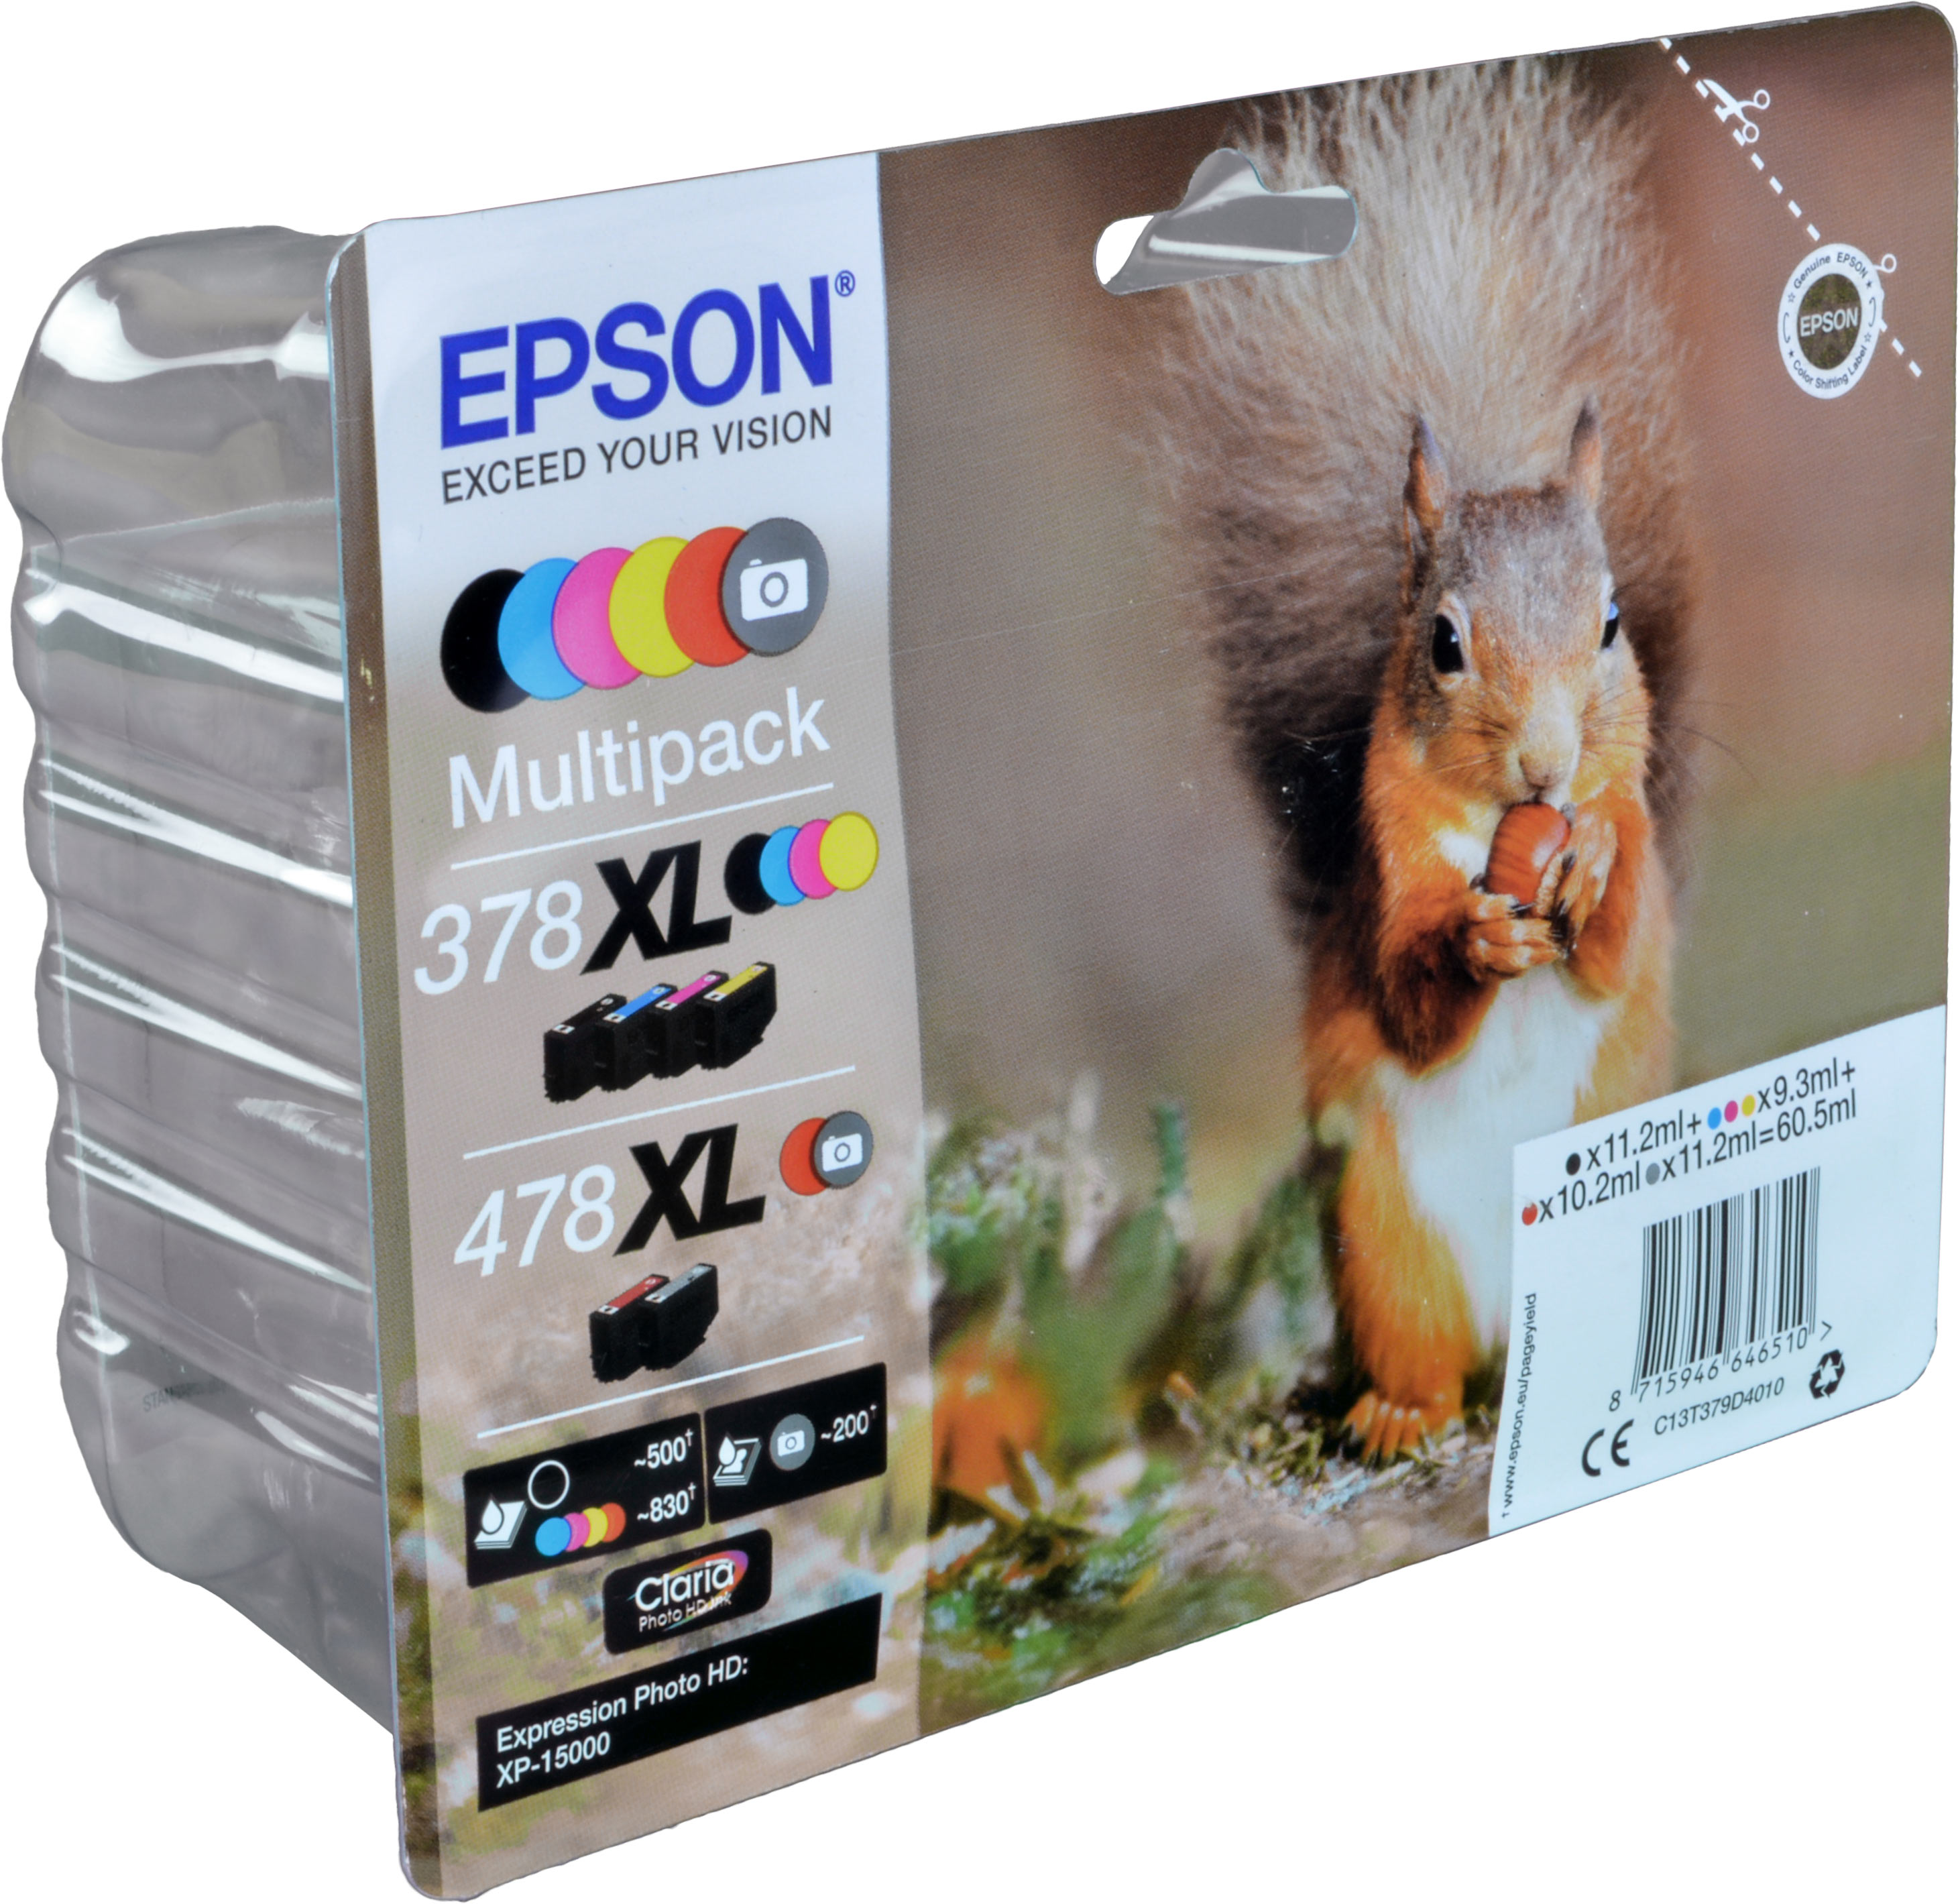 6 Epson Tinten C13T379D4010 Multipack 378XL/478XL  6-farbig